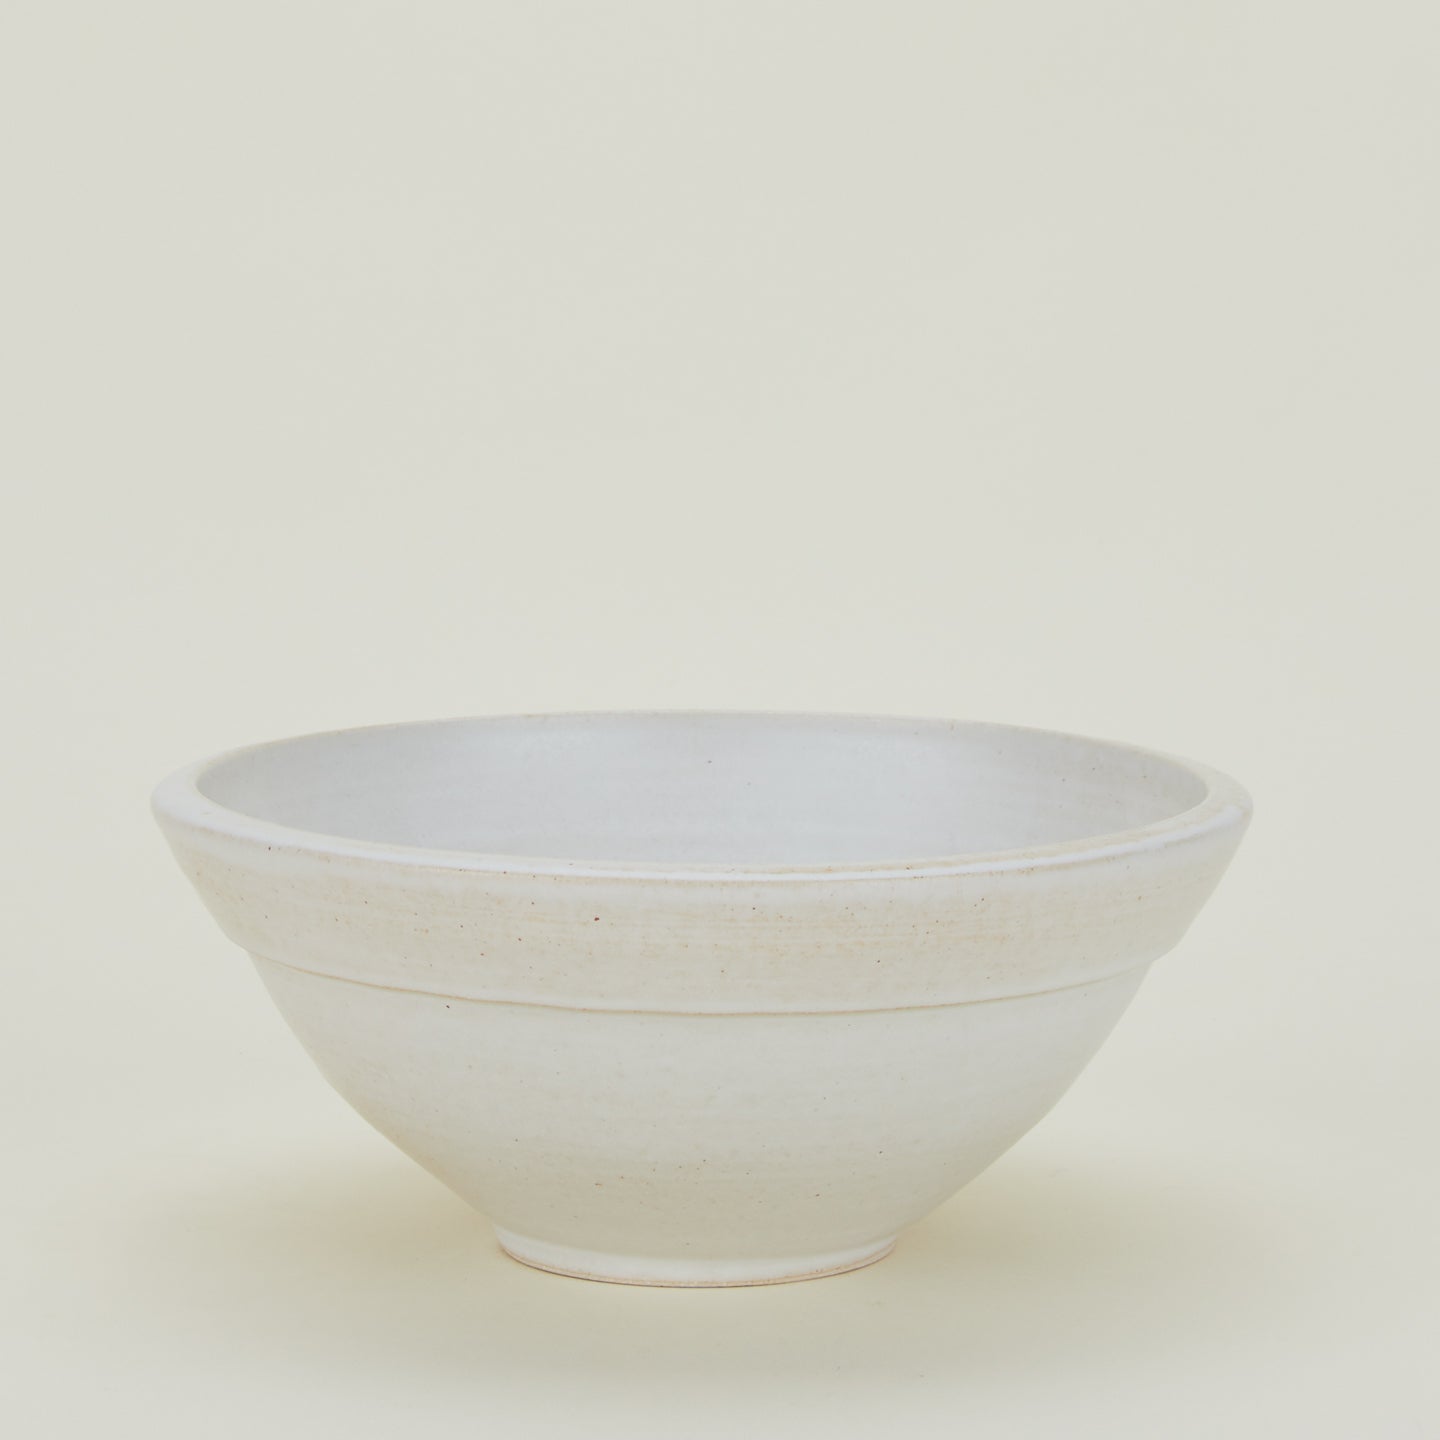 Stoneware Serving Bowl in Eggshell.